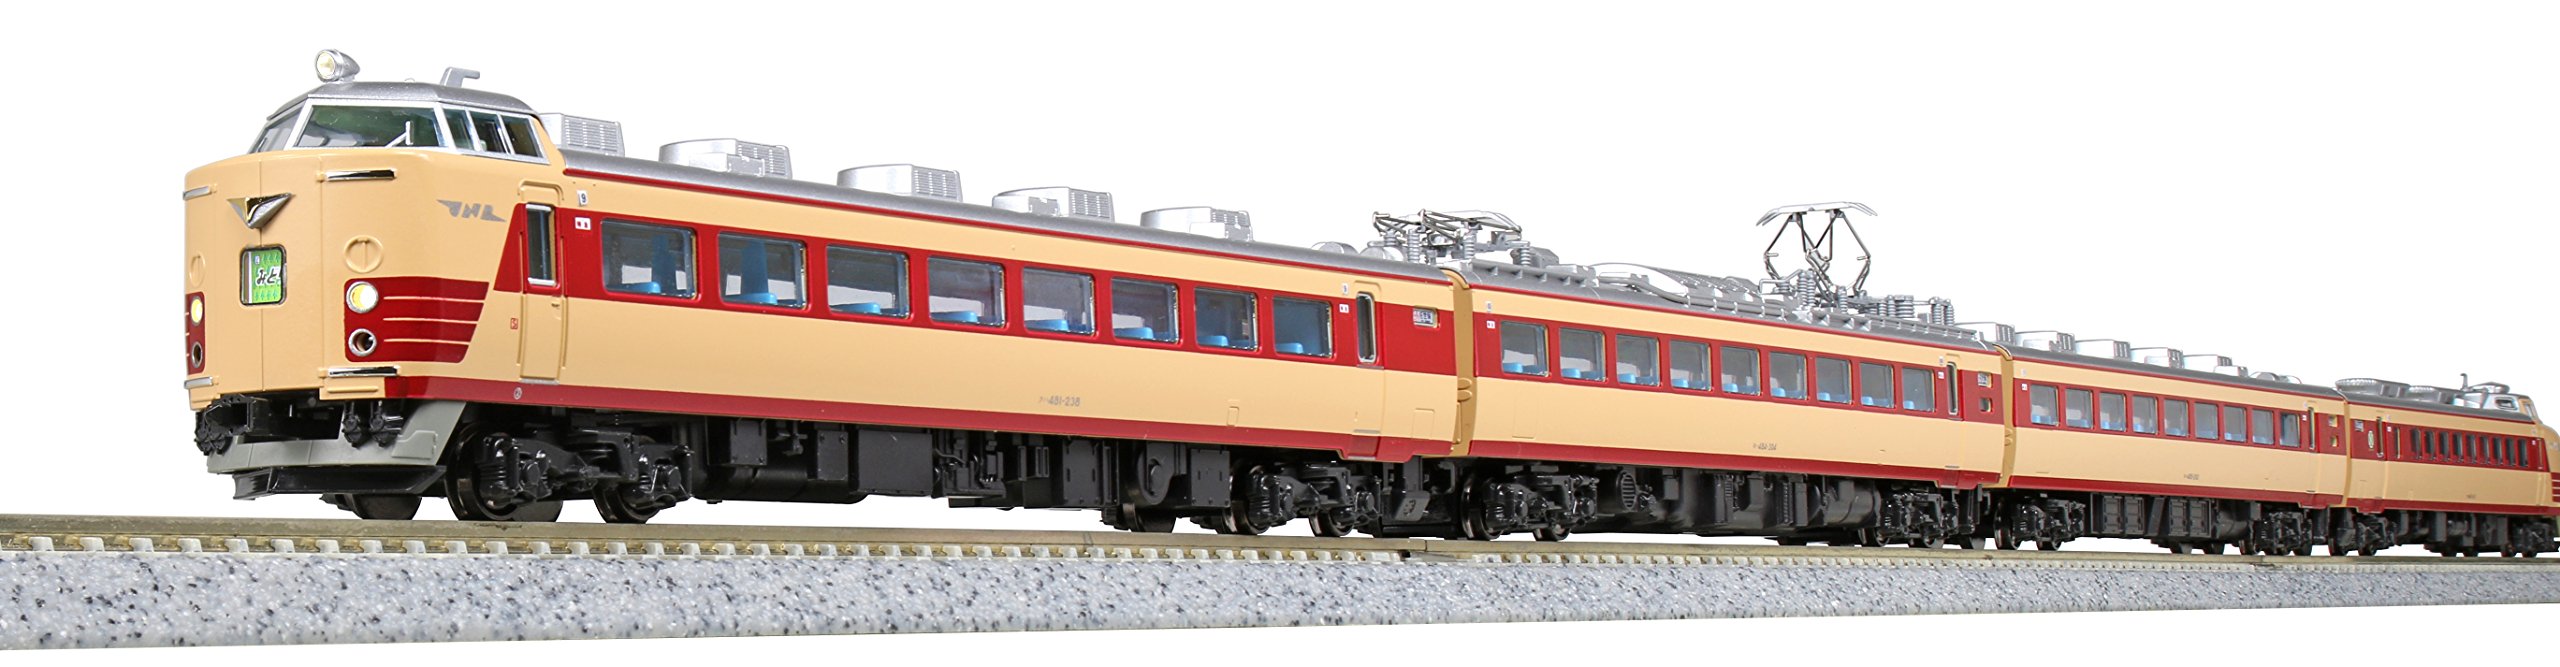 Kato N Gauge 485 Series 4-Car Midori Limited Express Set Model Railway Train 10-1480